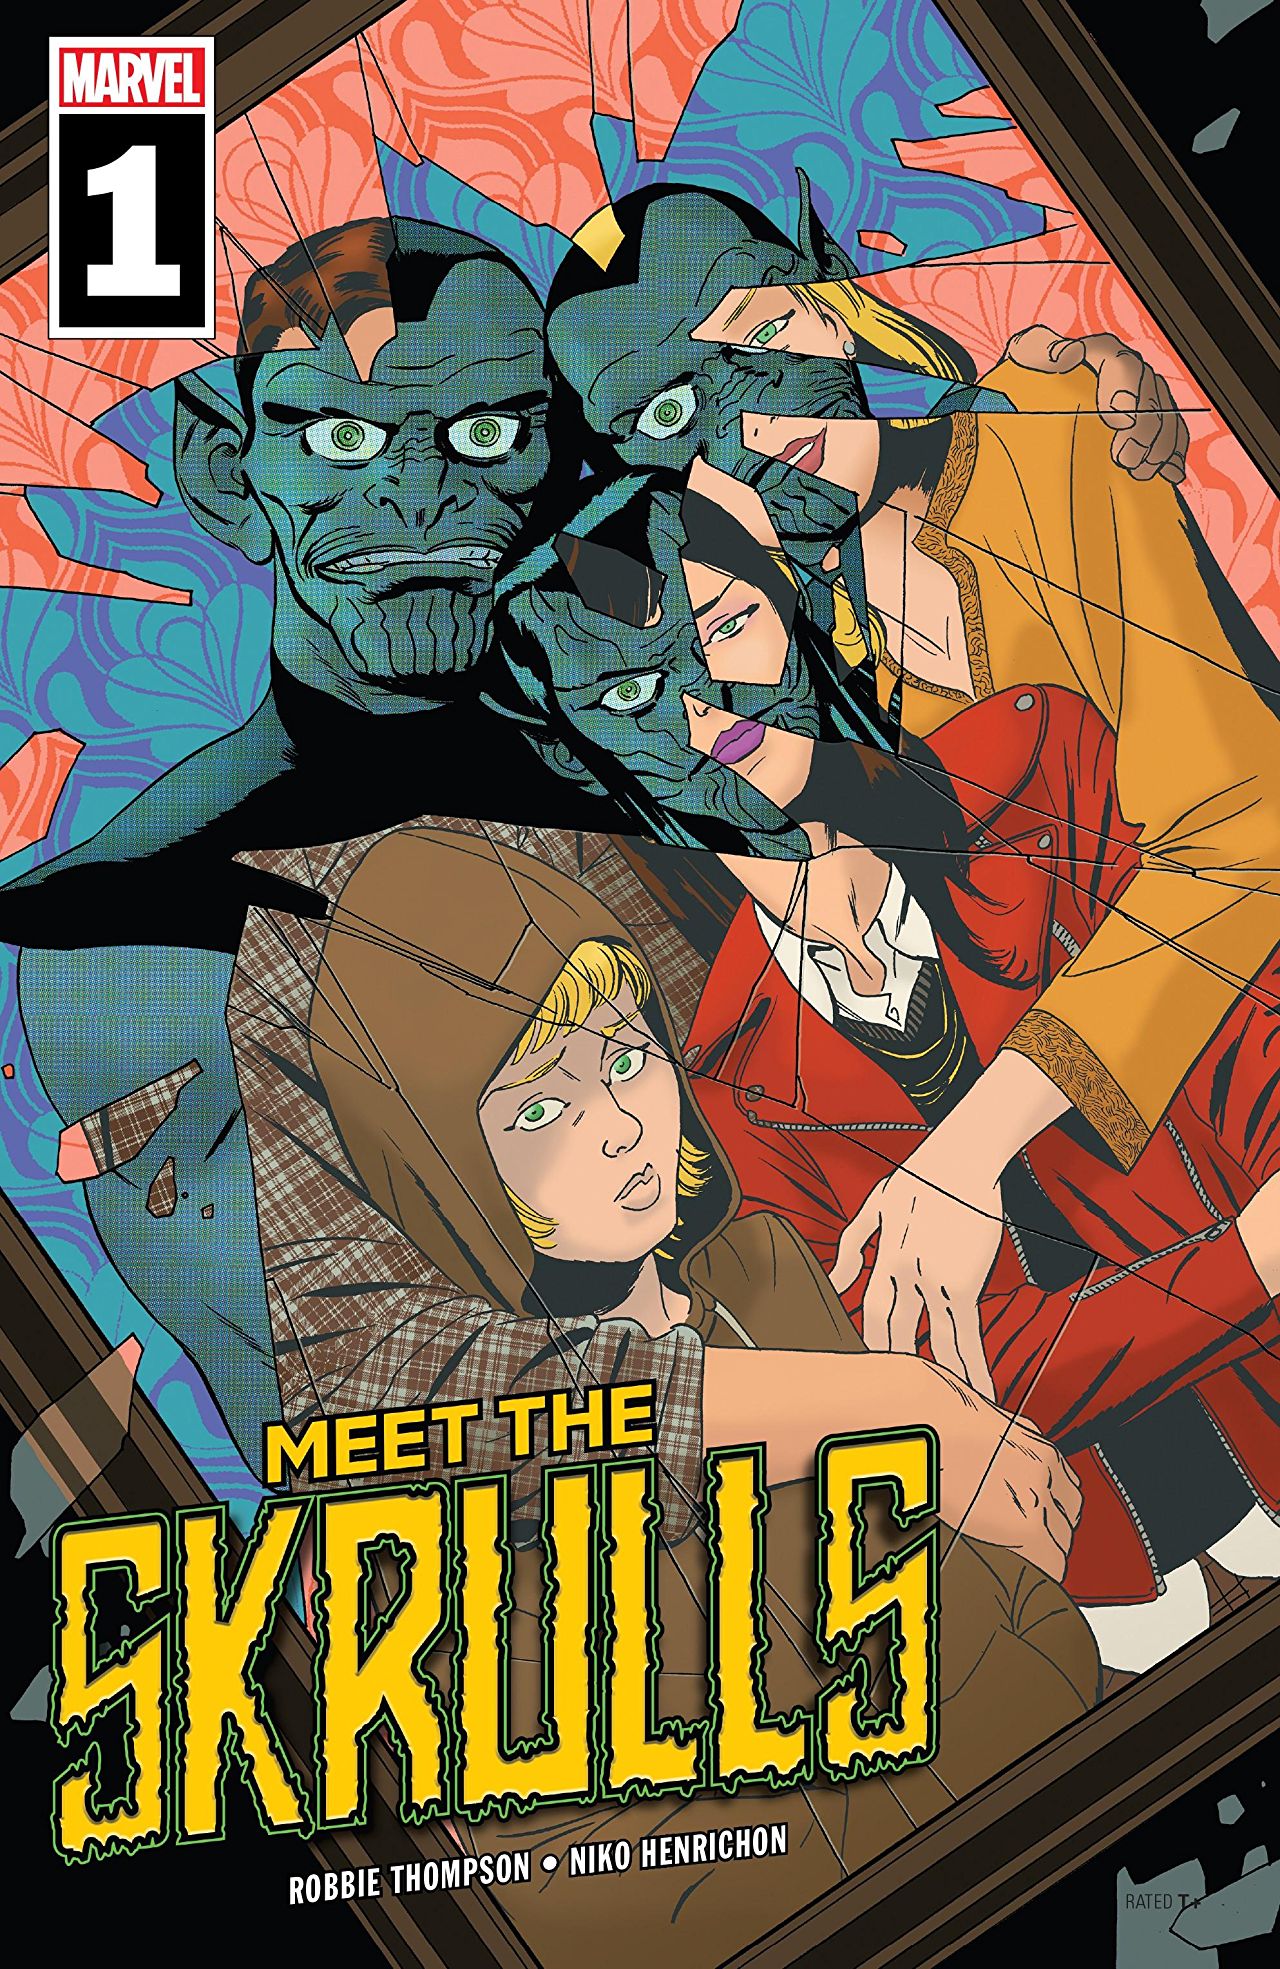 Marvel Preview: Meet the Skrulls #1